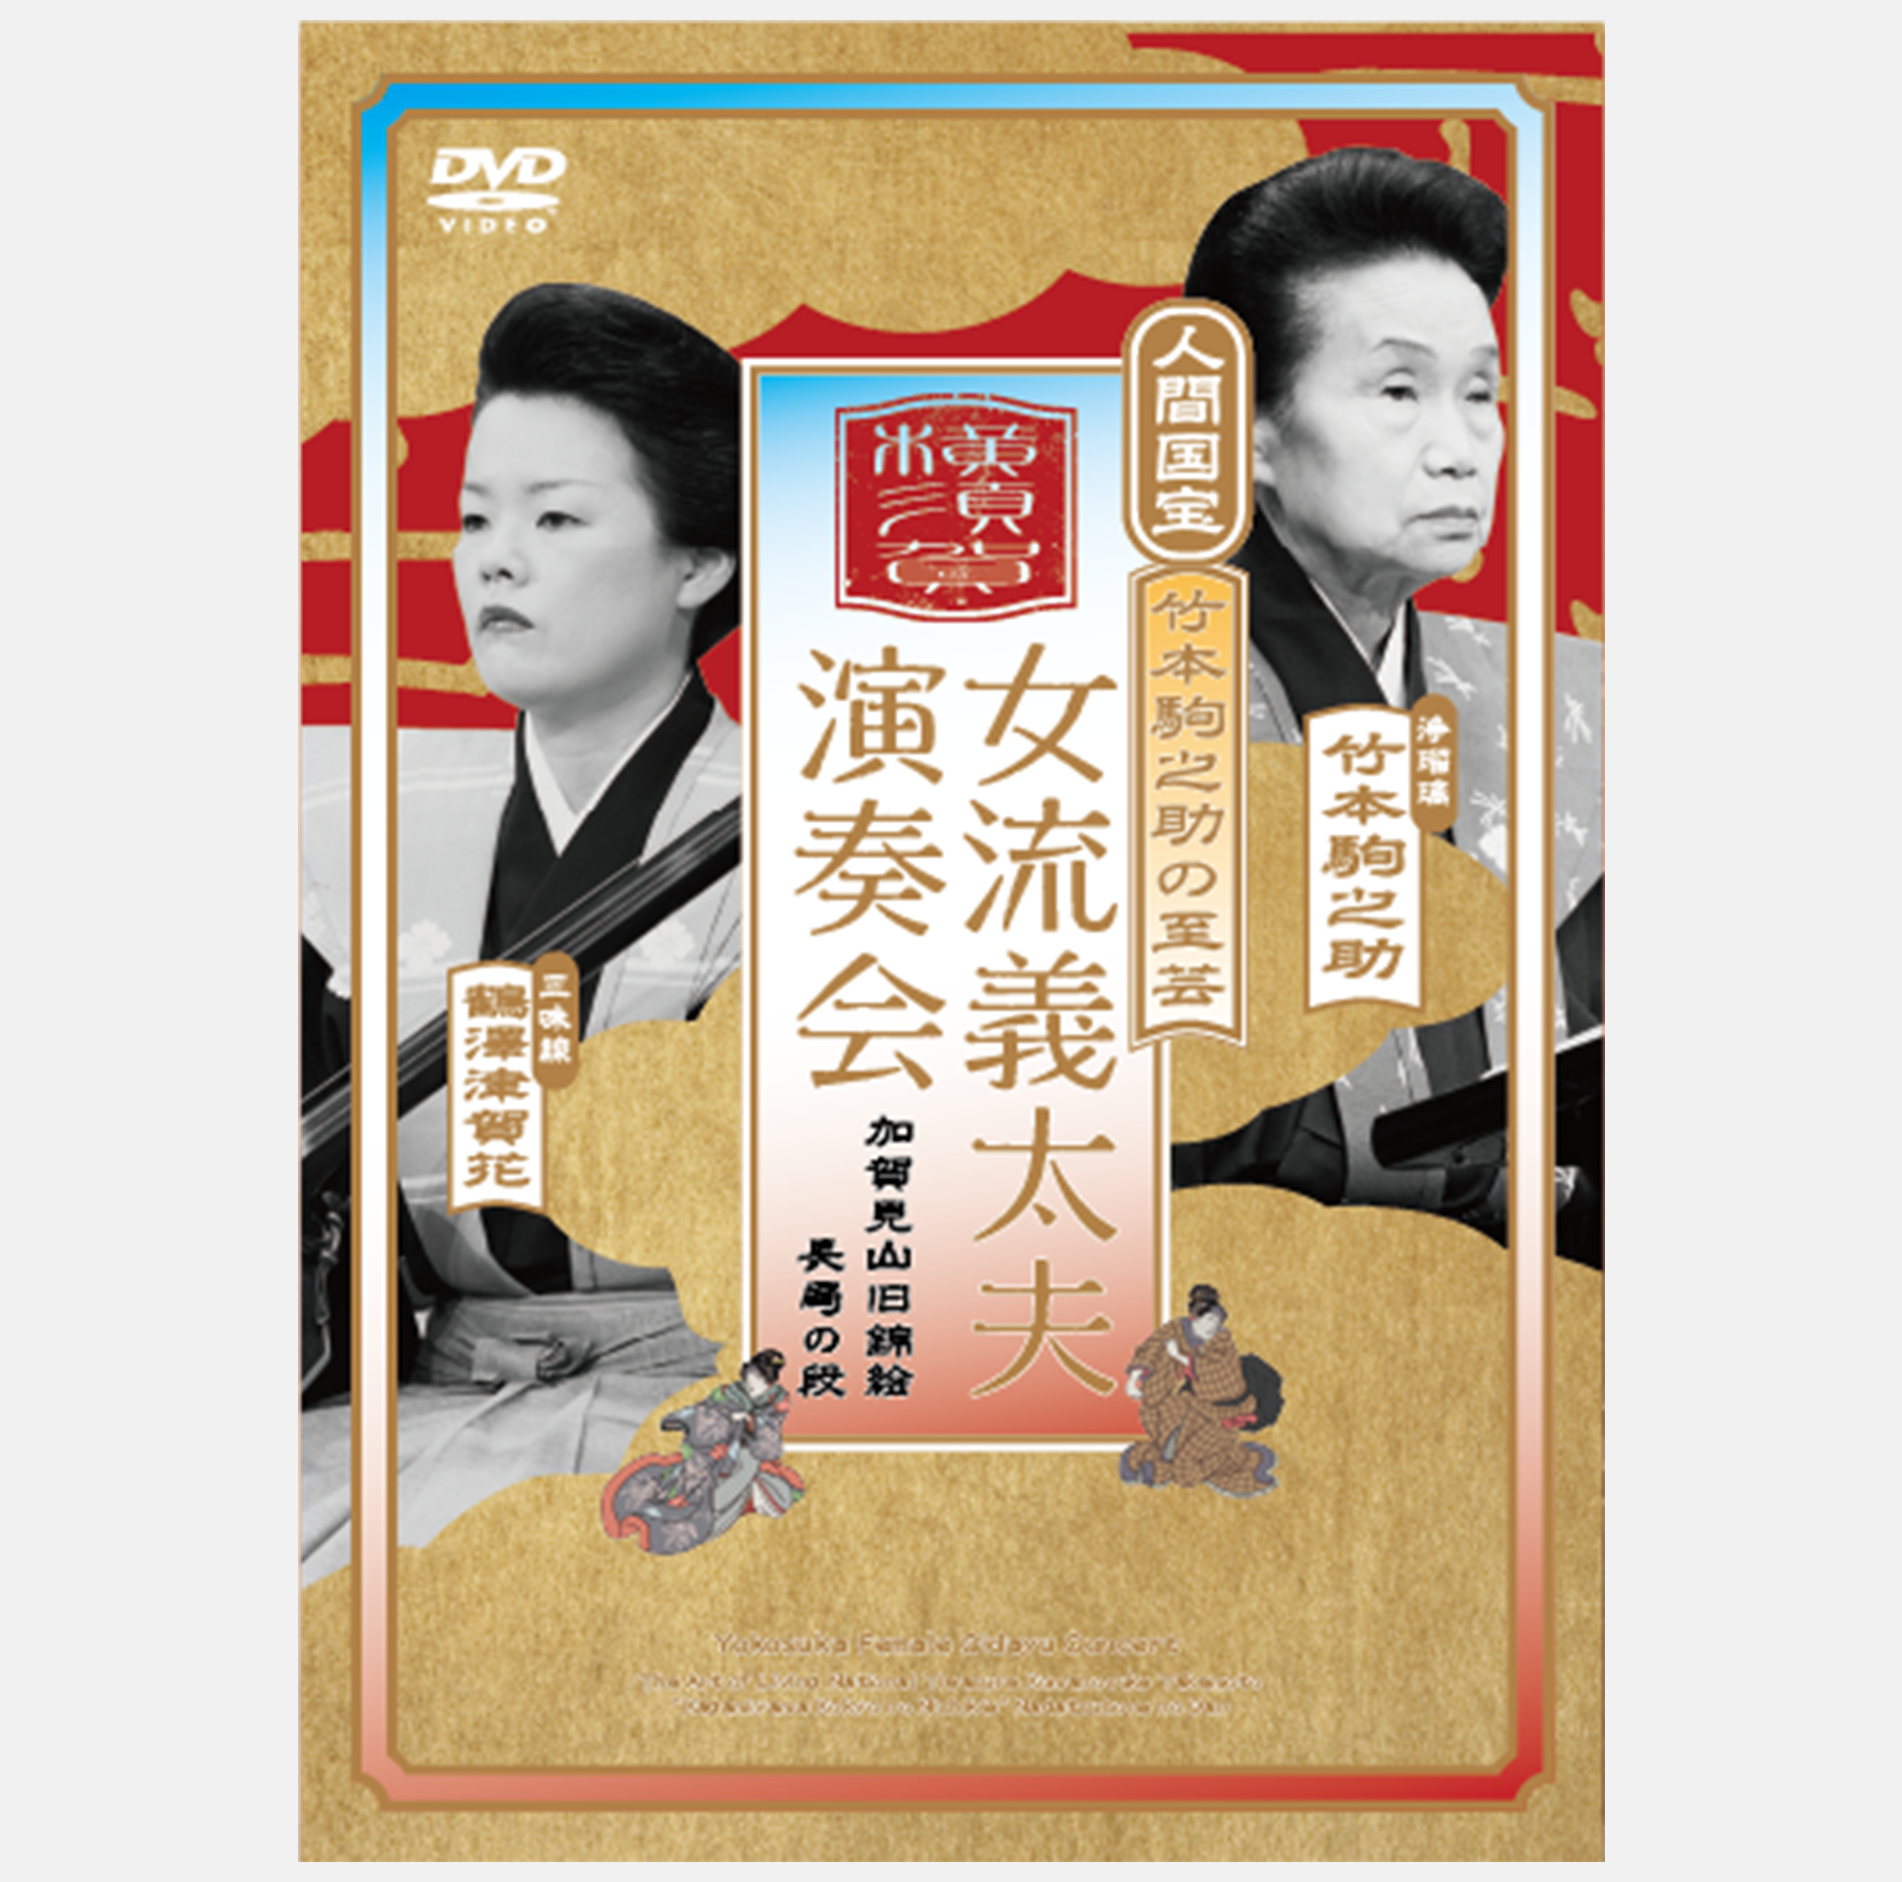 DVD Yokosuka Female Gidayu Concert -The Art of Living National Treasure Komanosuke Takemoto